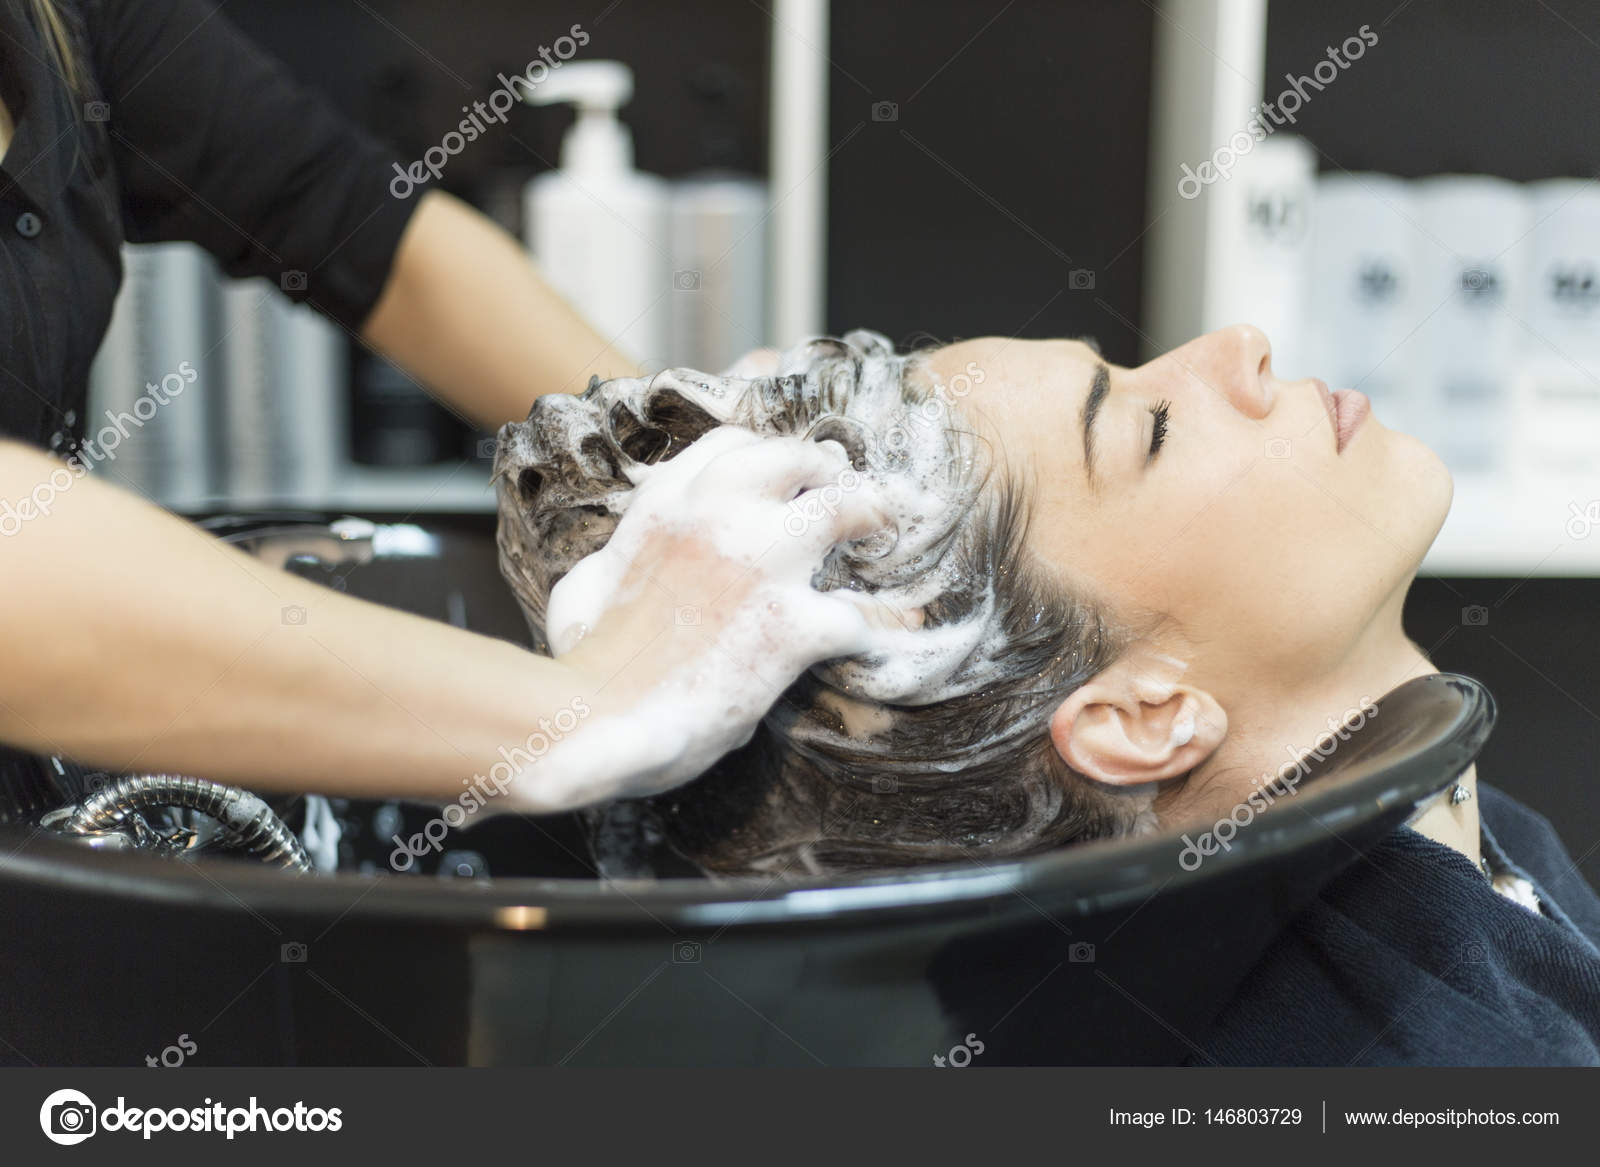 Метод мытья головы. Мытье головы. Мытье волос в парикмахерской. Мытье головы в салоне красоты. Мытьё головы в парикмахерской.